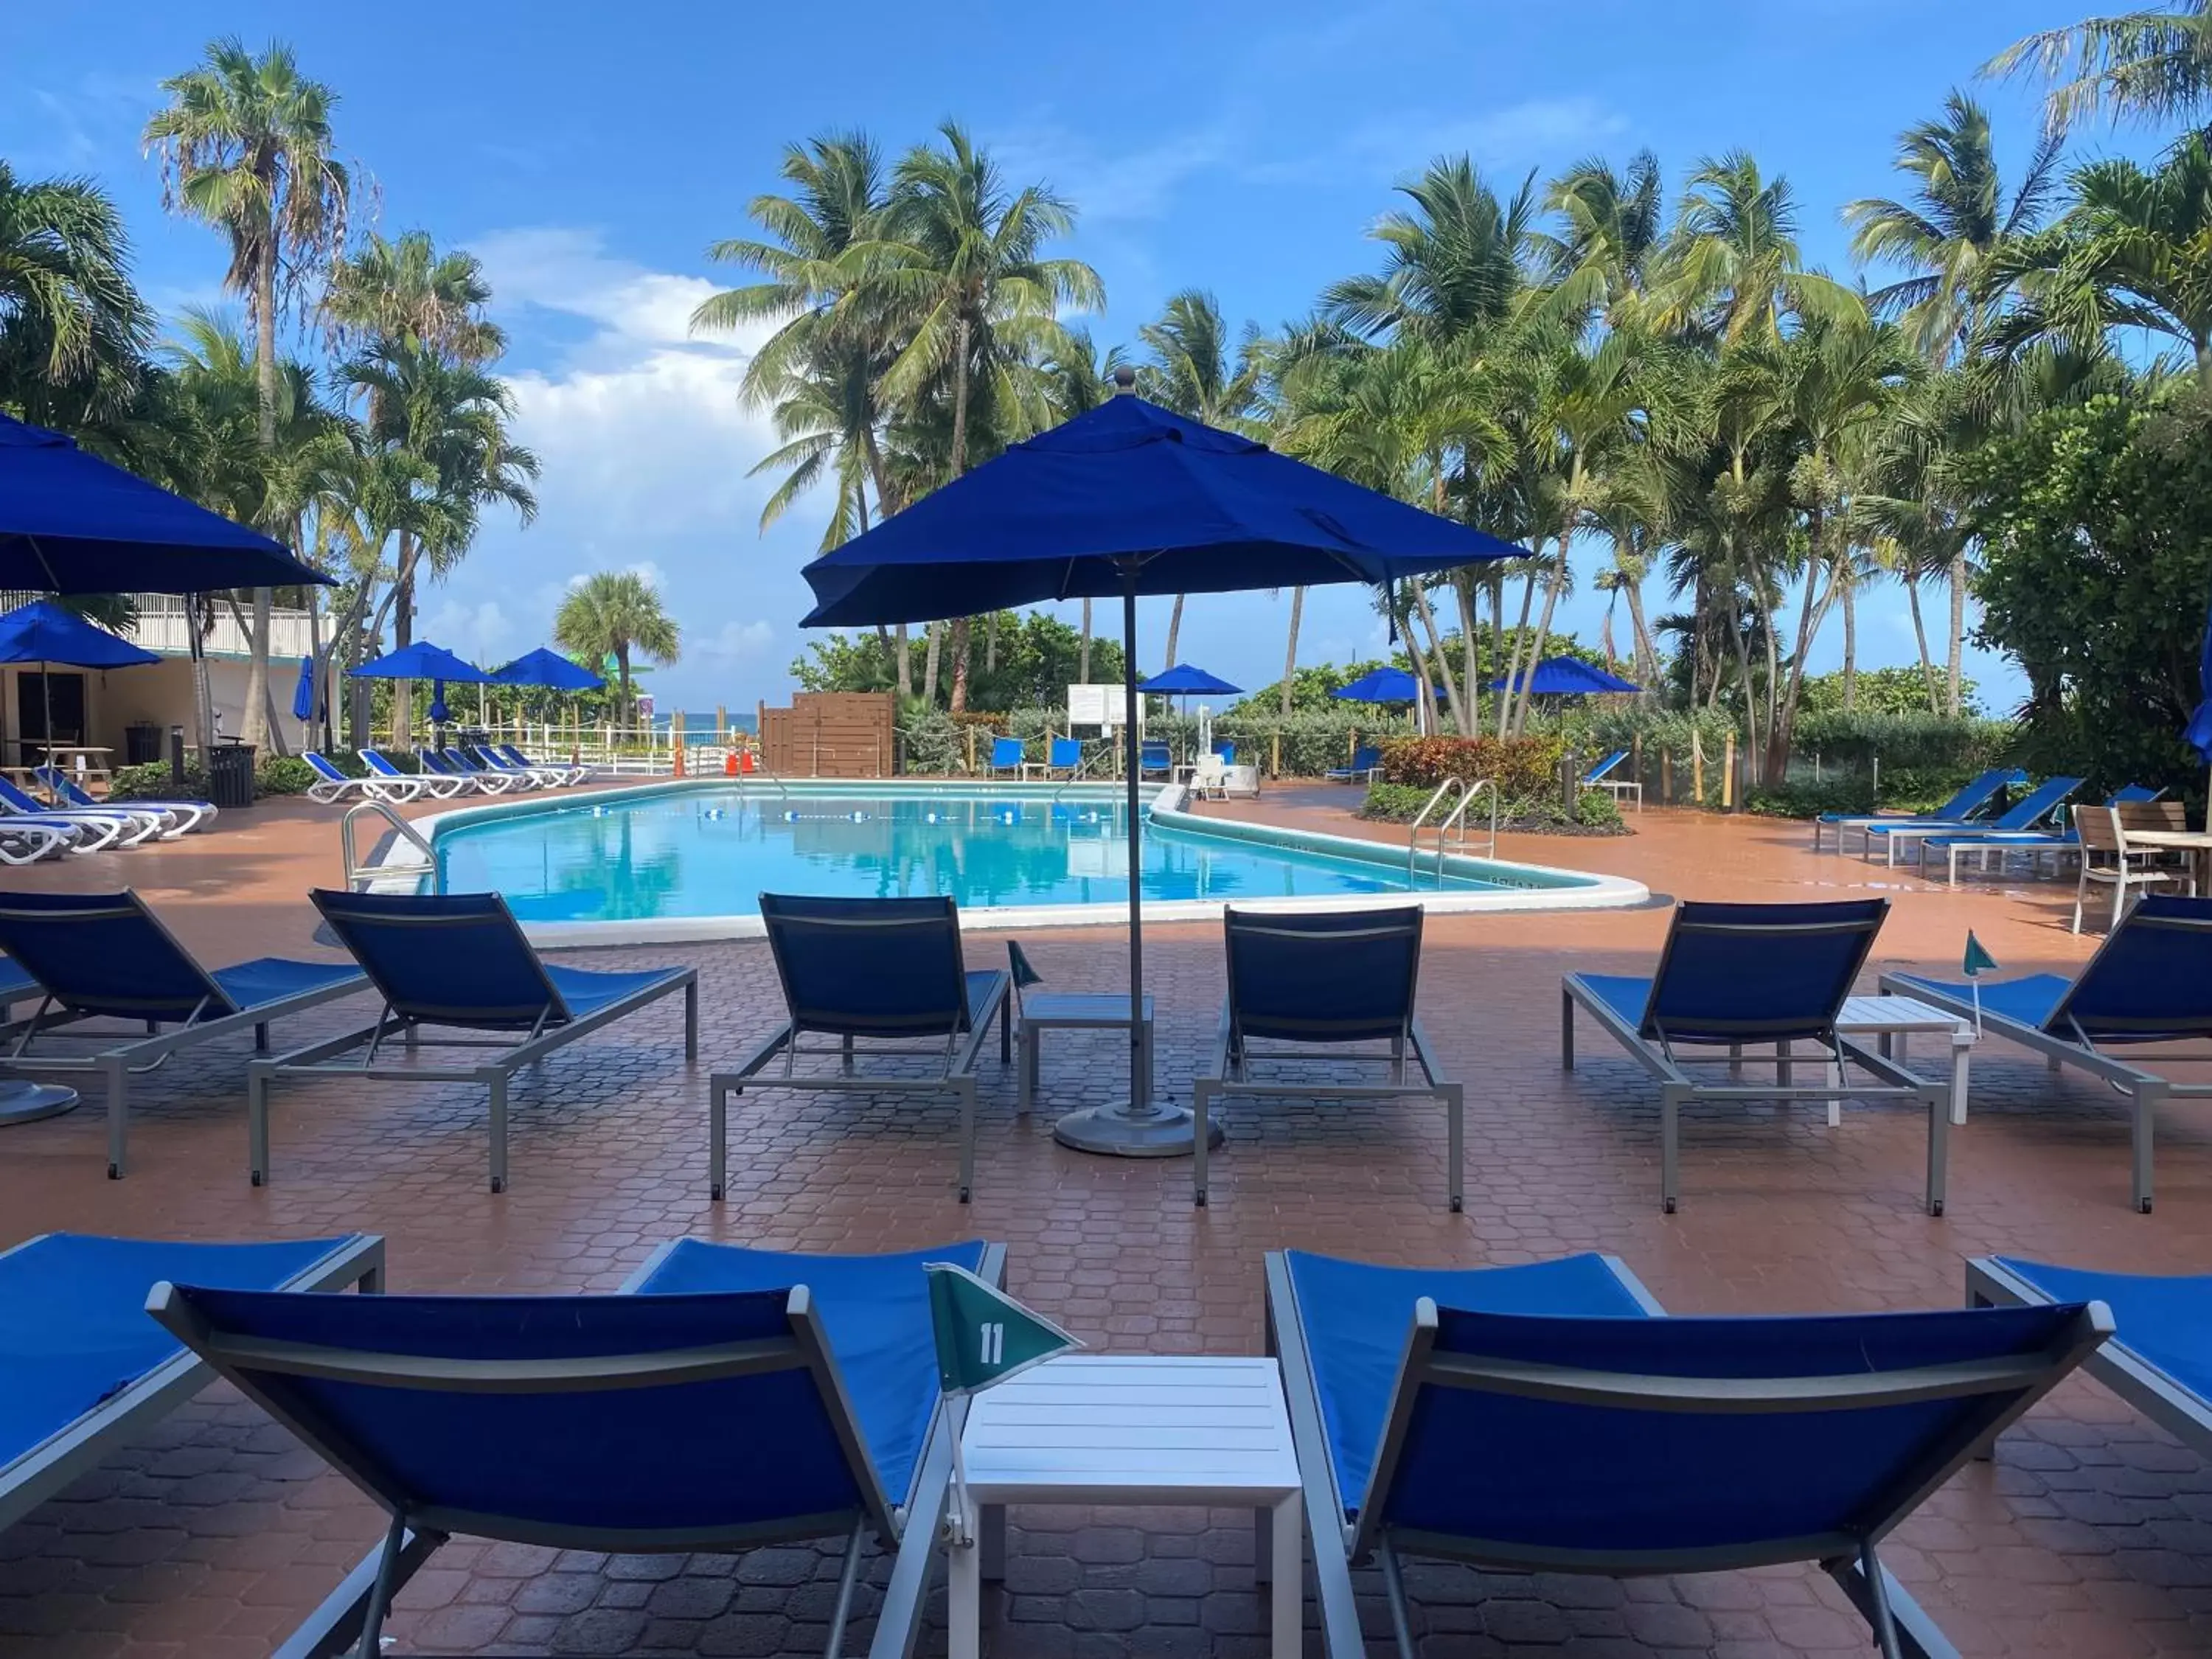 Swimming Pool in Radisson Resort Miami Beach